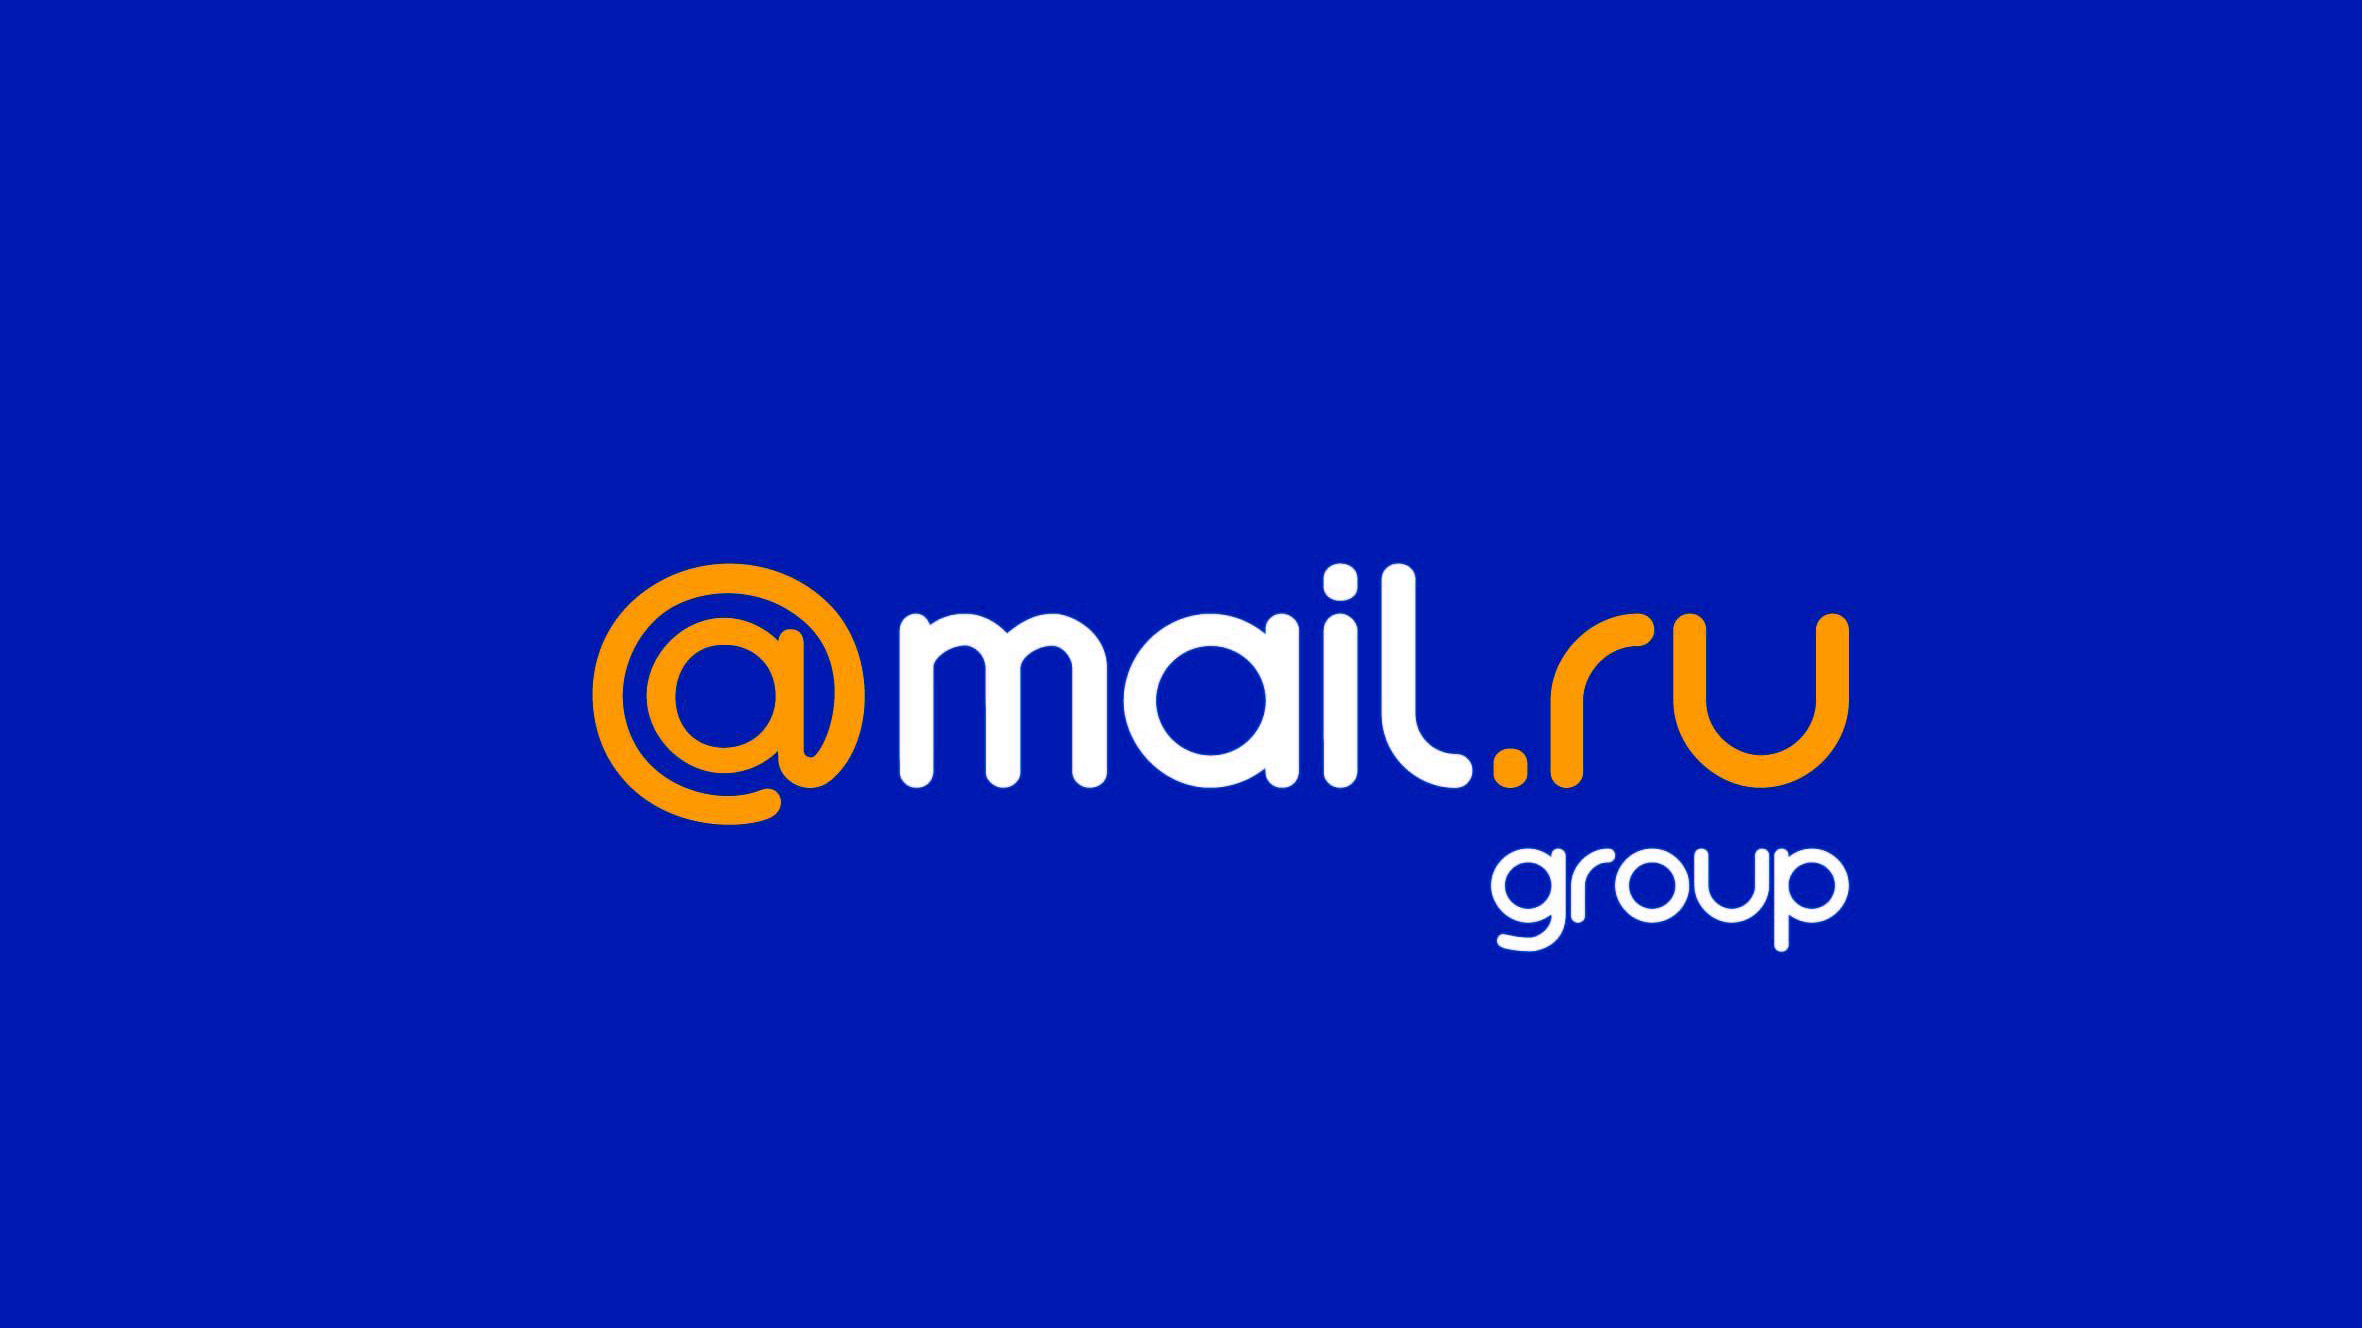 Denis mail ru. Mail.ru Group логотип. Почта майл ру. Логотип почты майл ру.